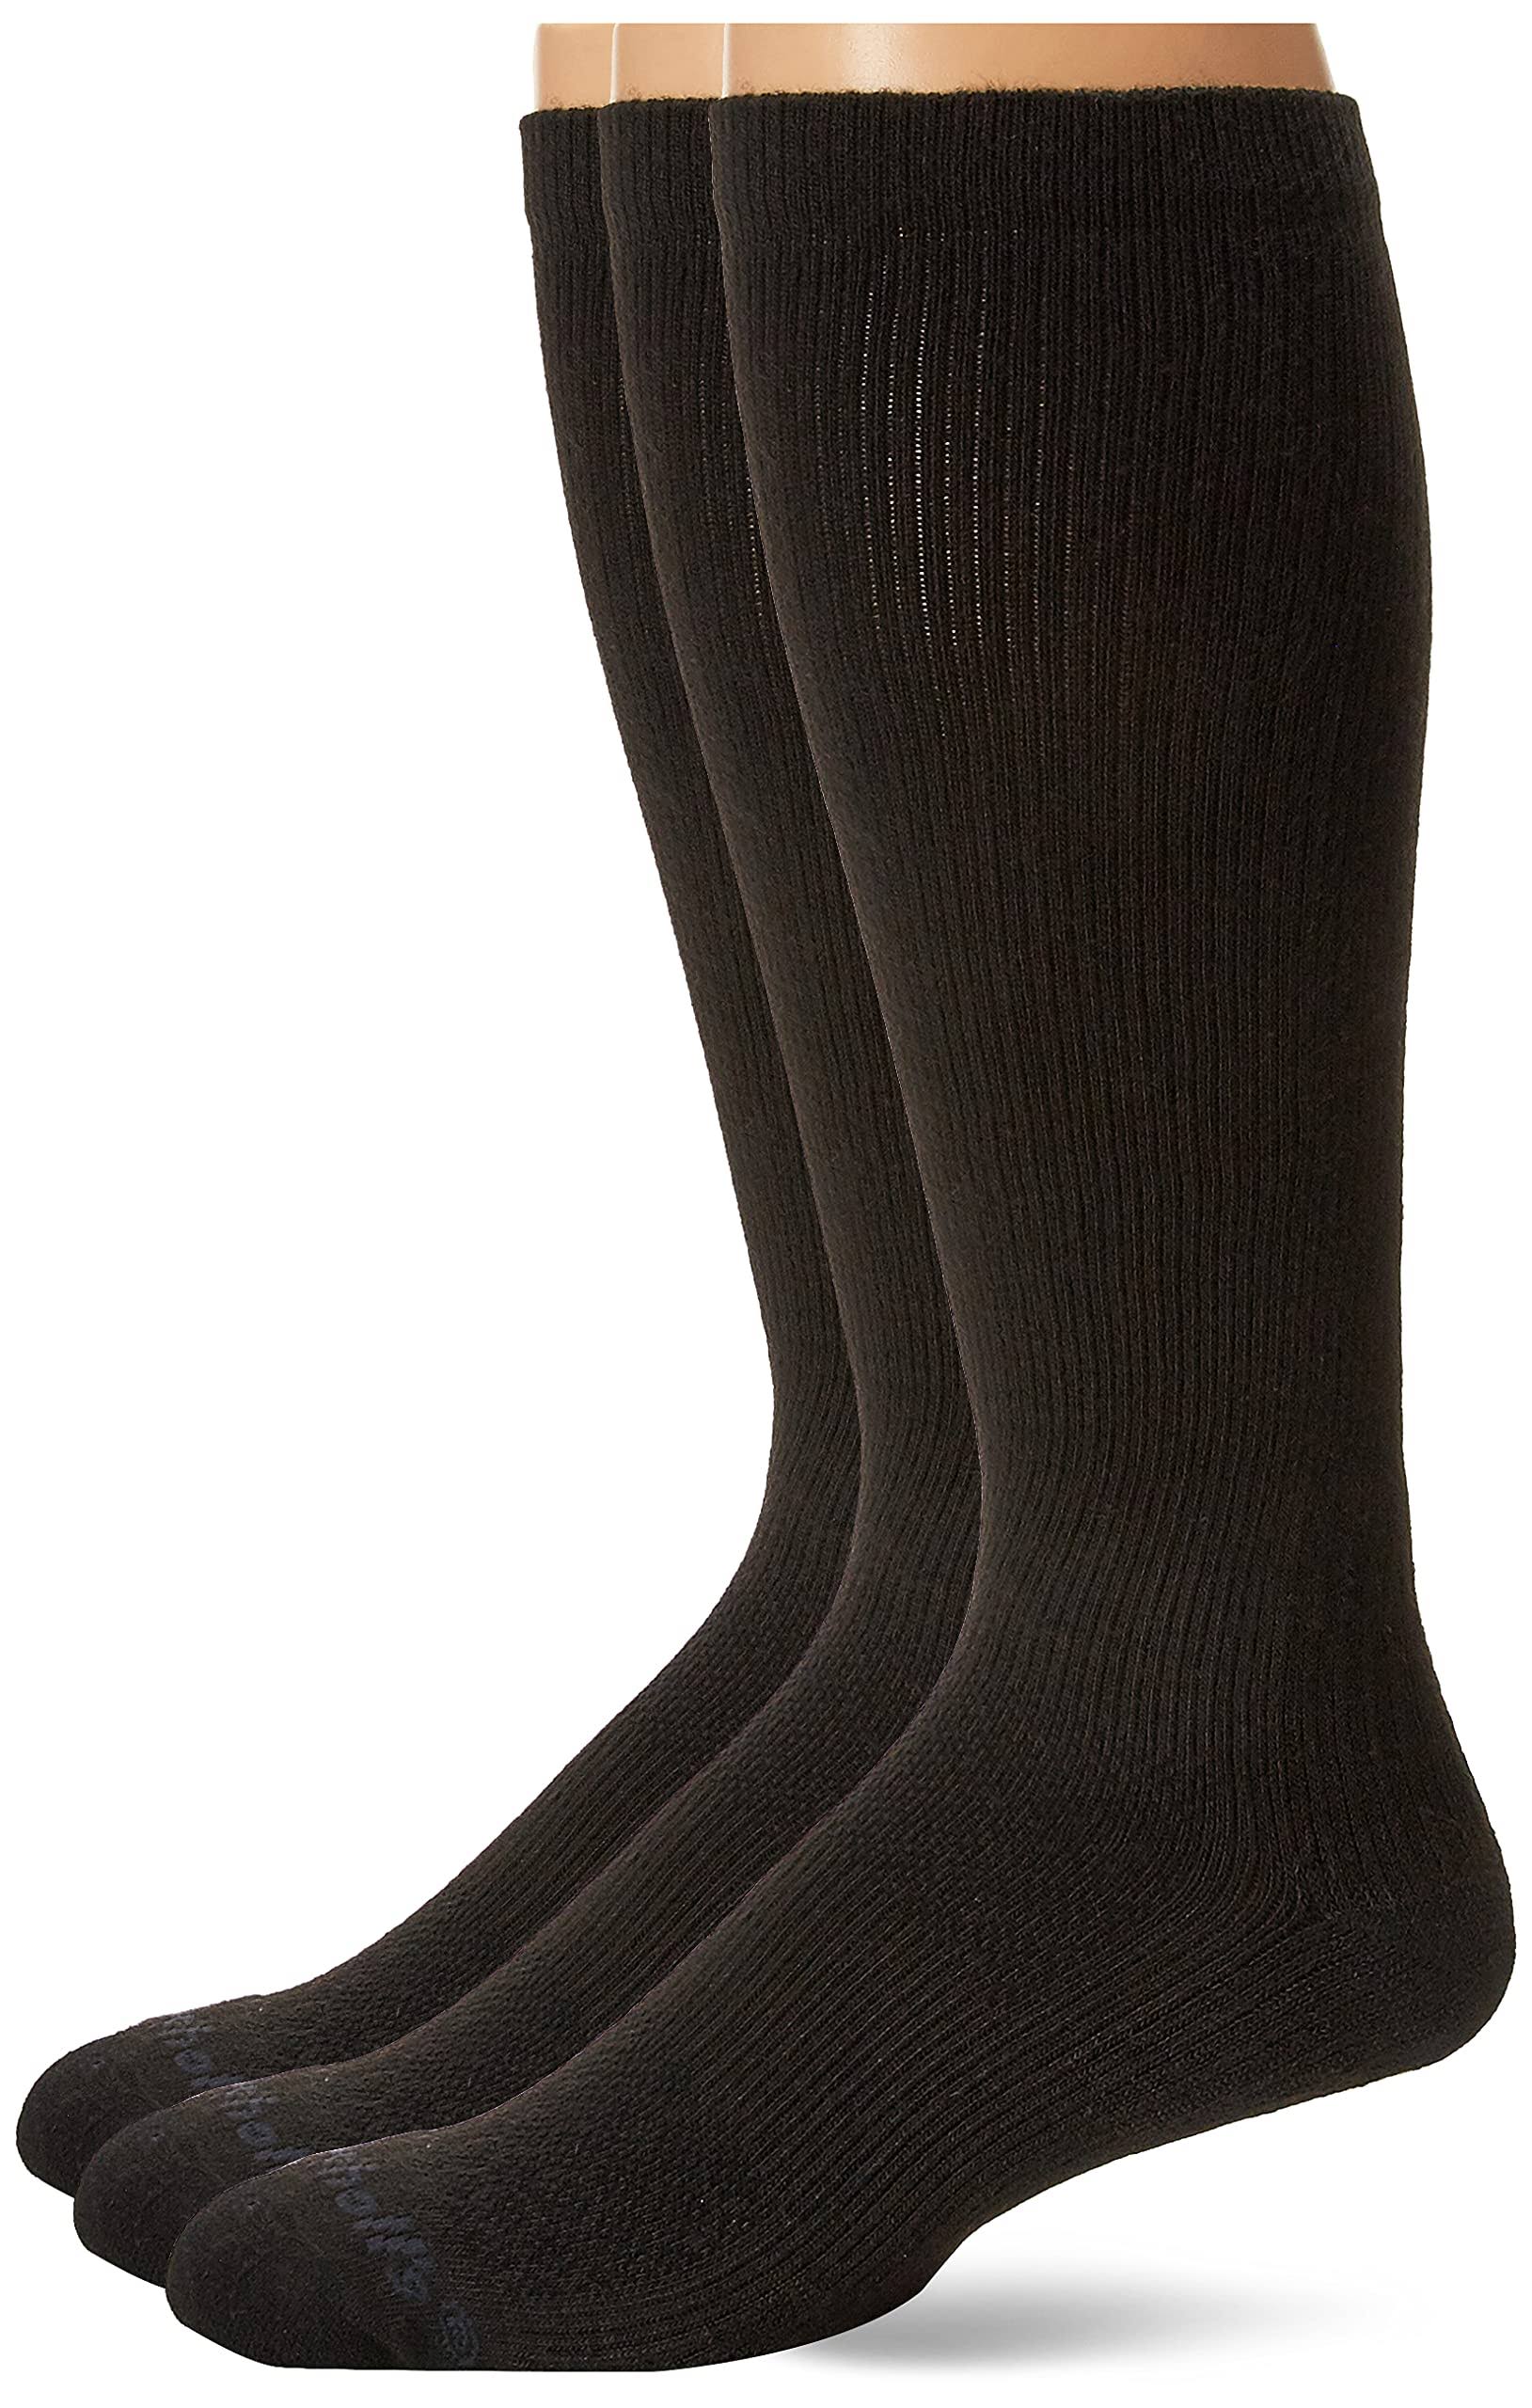 Dr Scholls Women's Compression Sock - Black, Medium